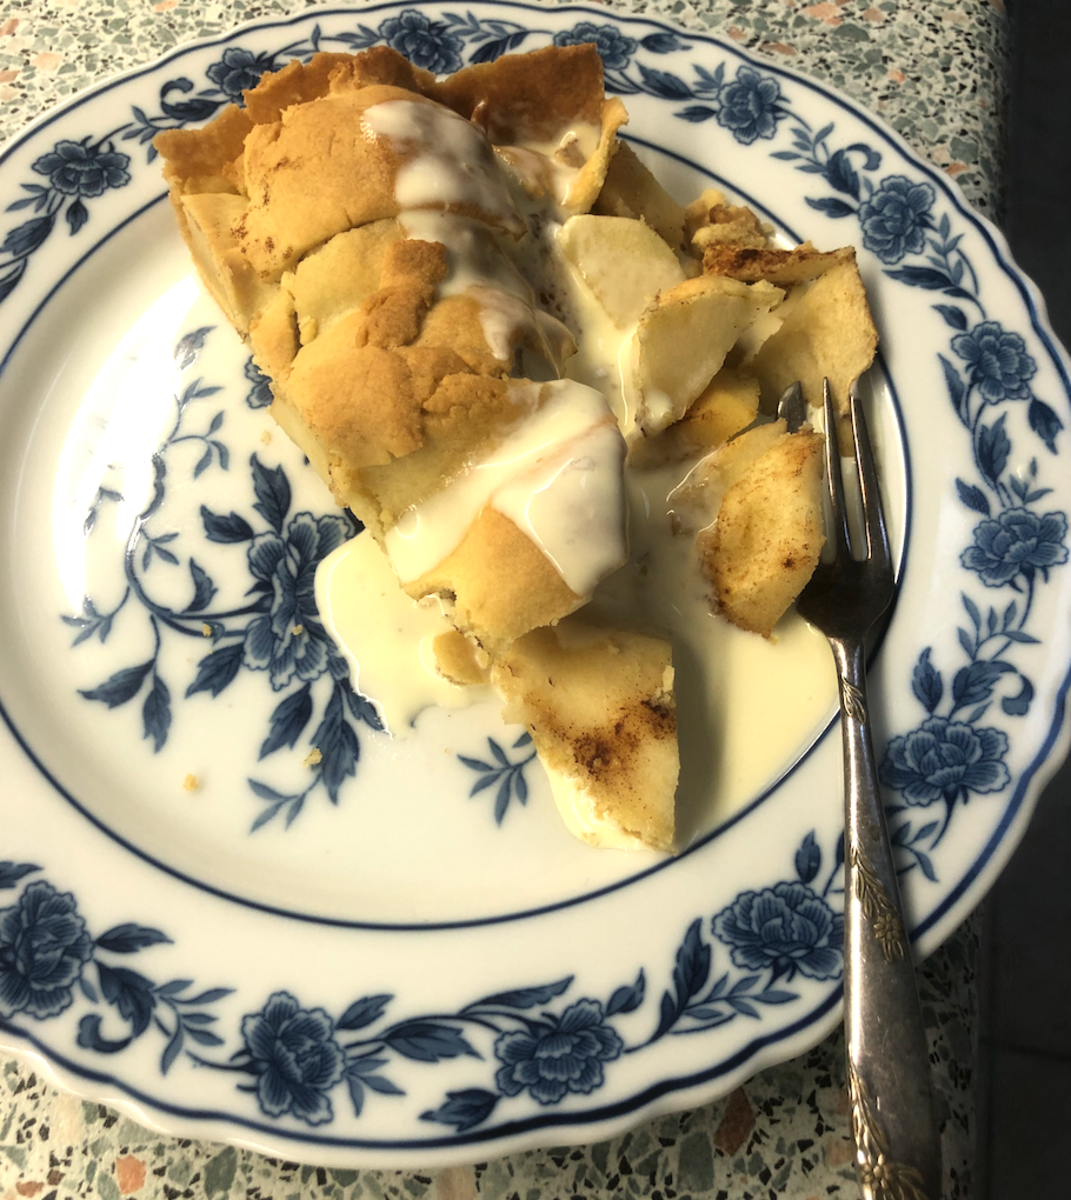 Apple shortcake served with cream